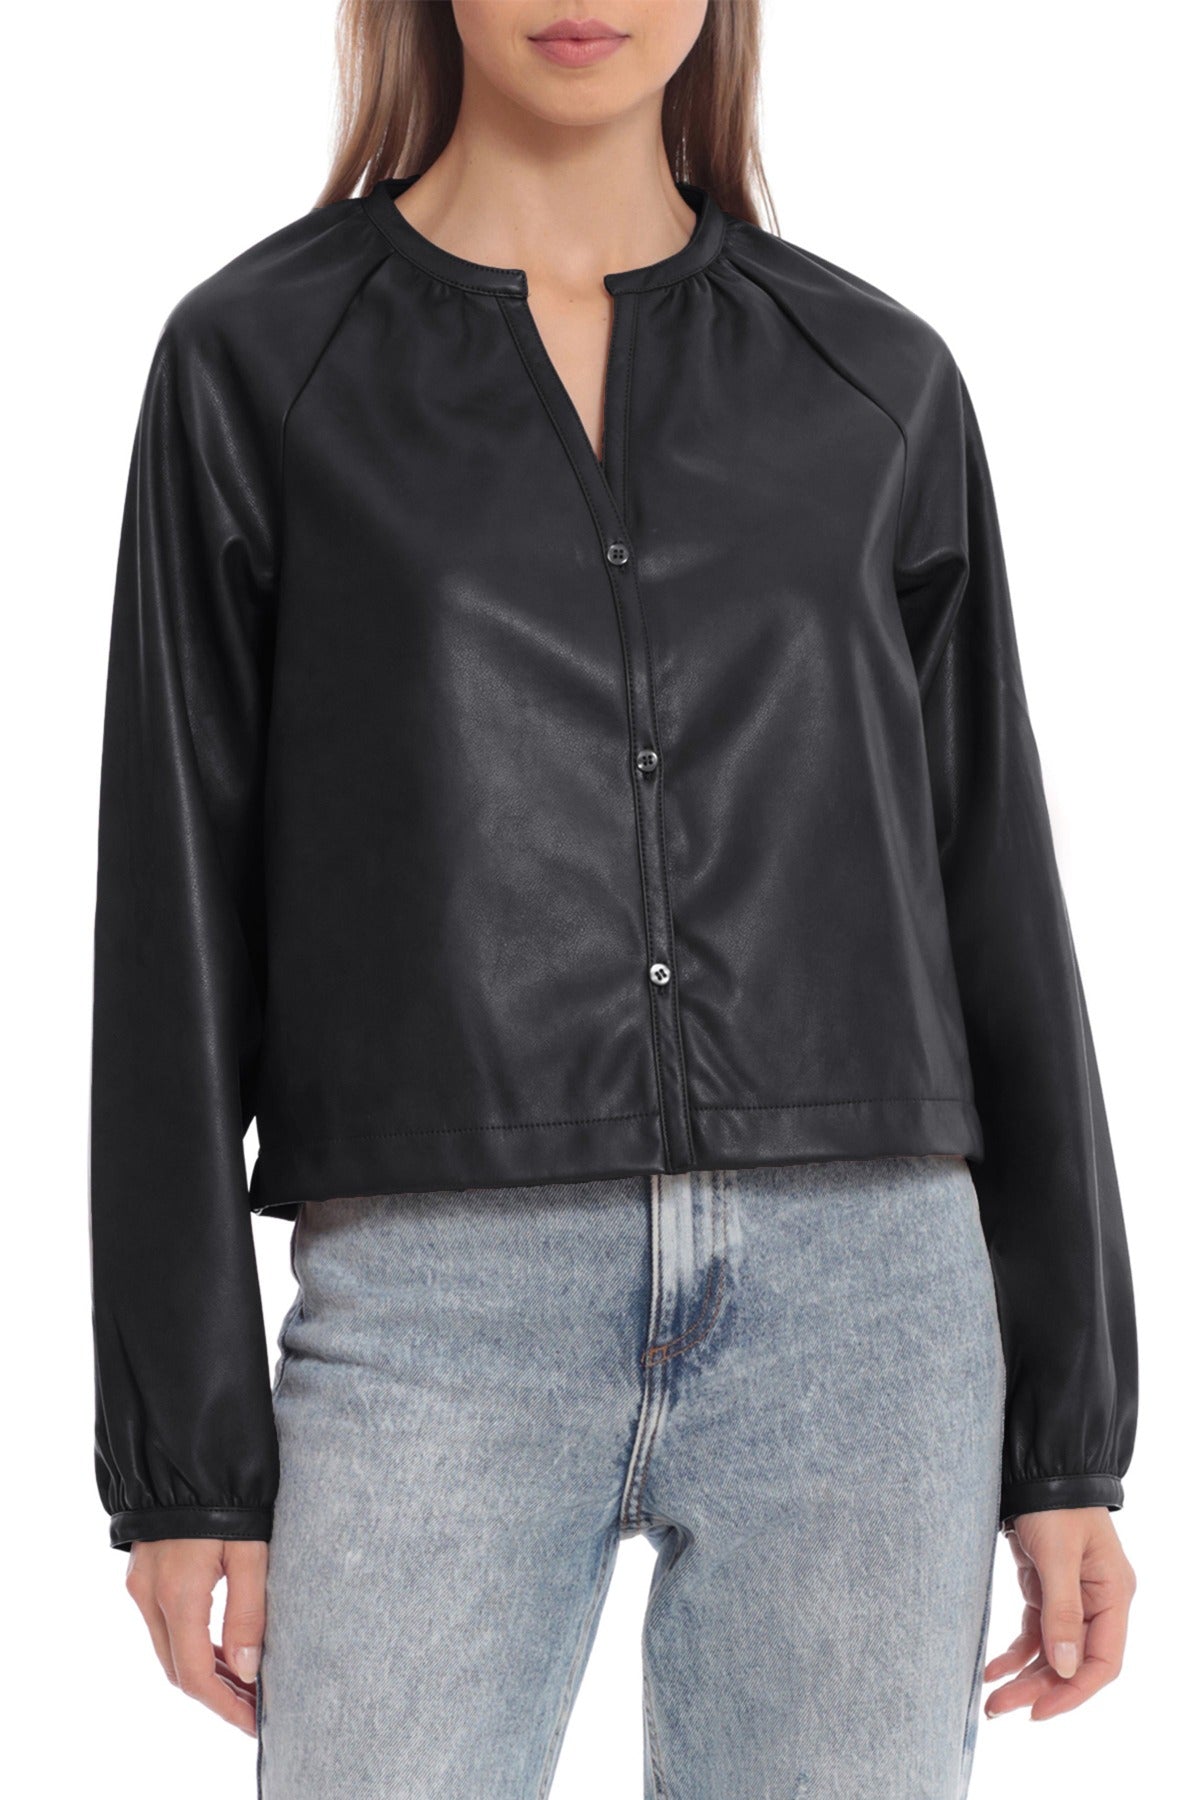 Women's Faux Leather Puff Sleeve Raglan Top Shirt Jacket black v-neck